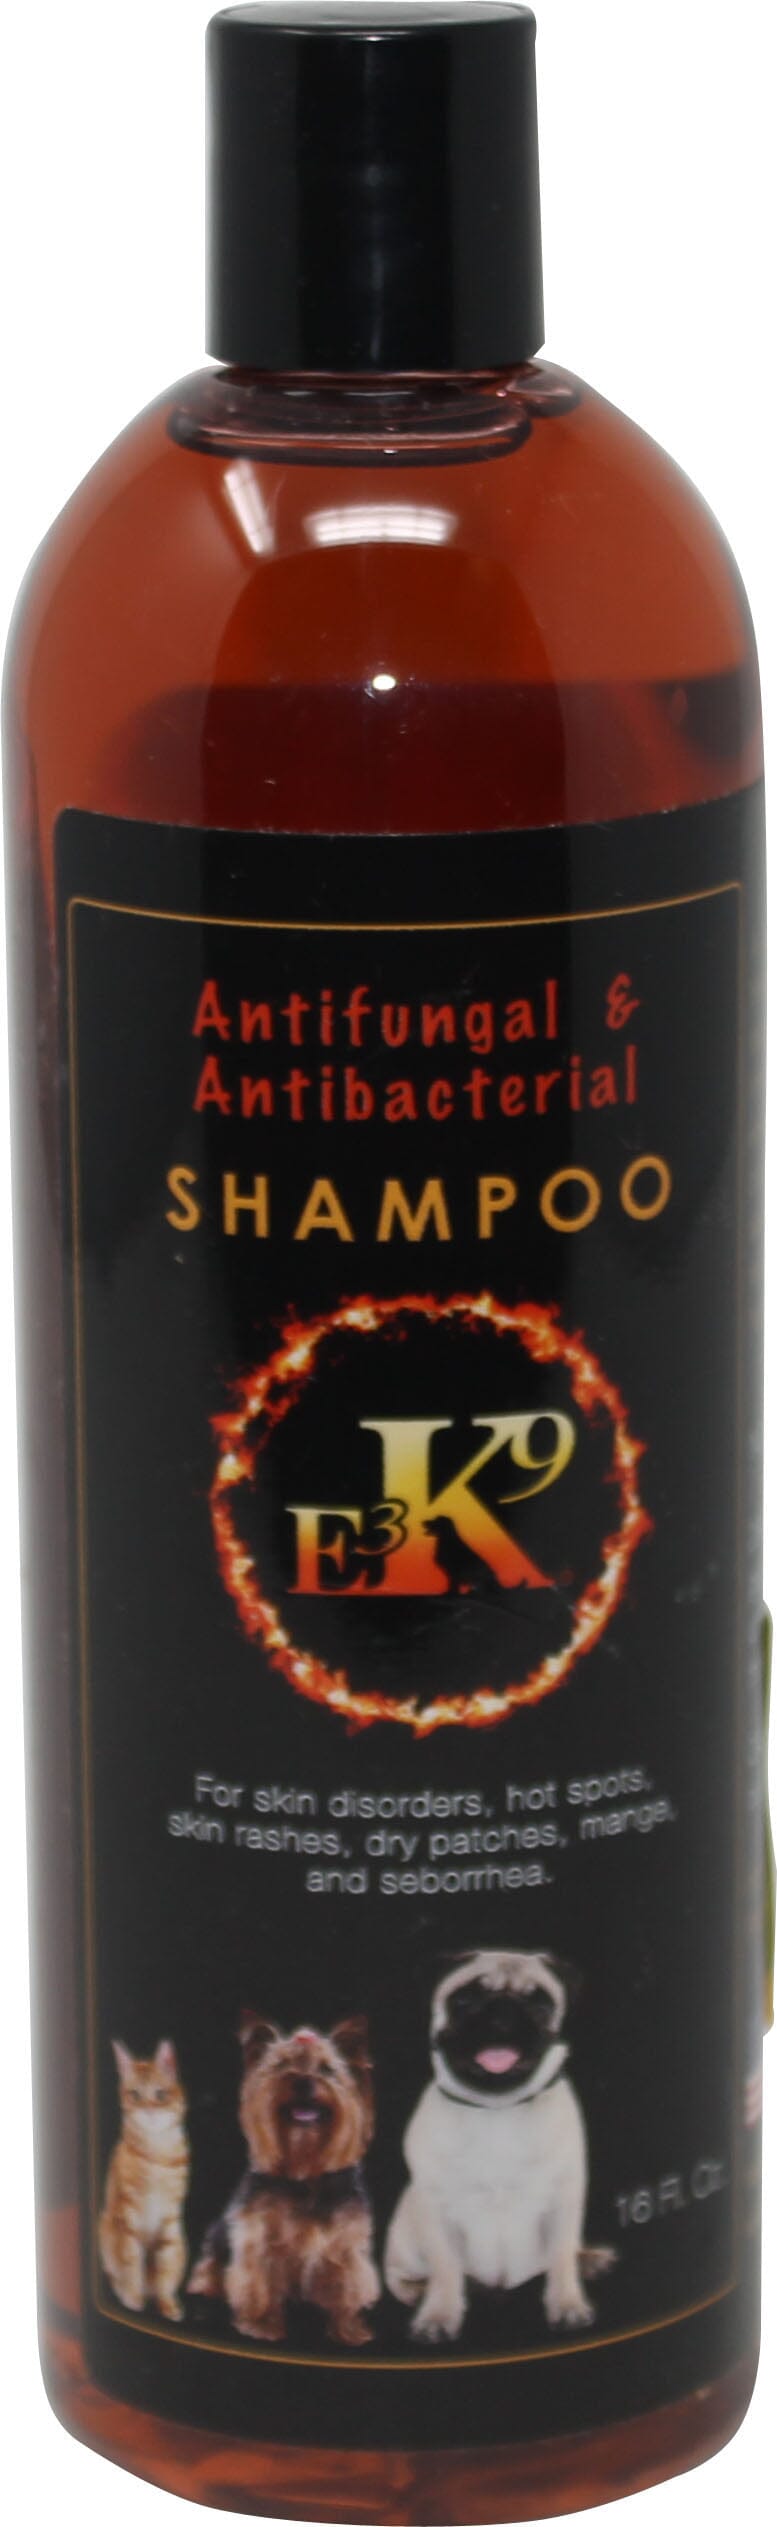 E3 K9 Antifungal & Antibacterial Dog Shampoo - 16 Oz  